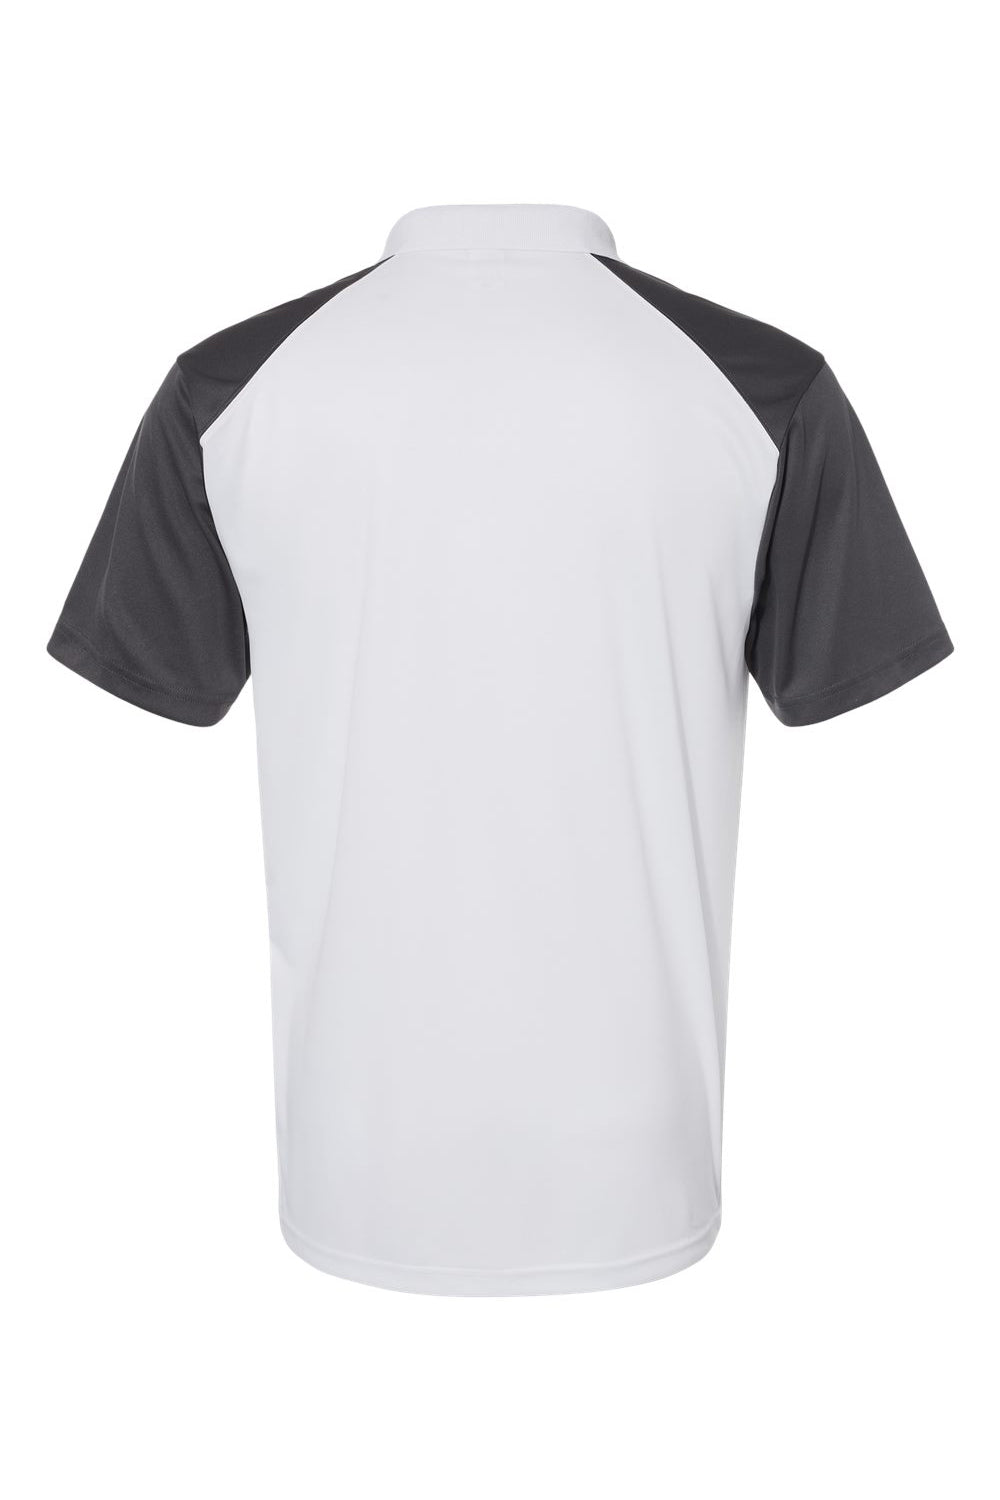 C2 Sport 5903 Mens Moisture Wicking Short Sleeve Polo Shirt White/Graphite Flat Back